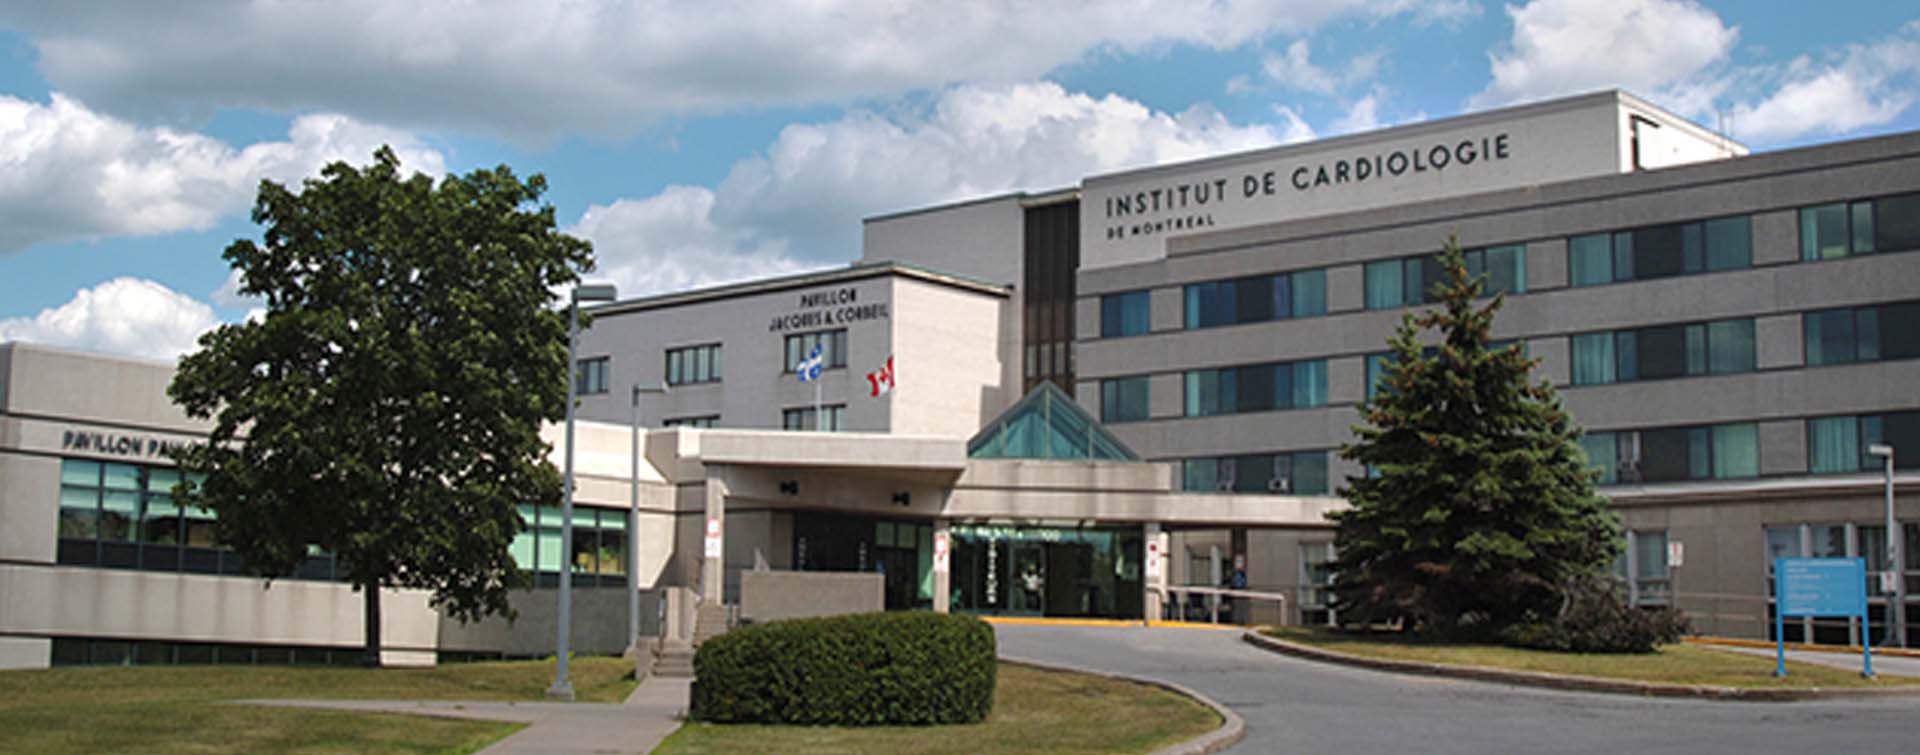 Institut de cardiologie de Montréal